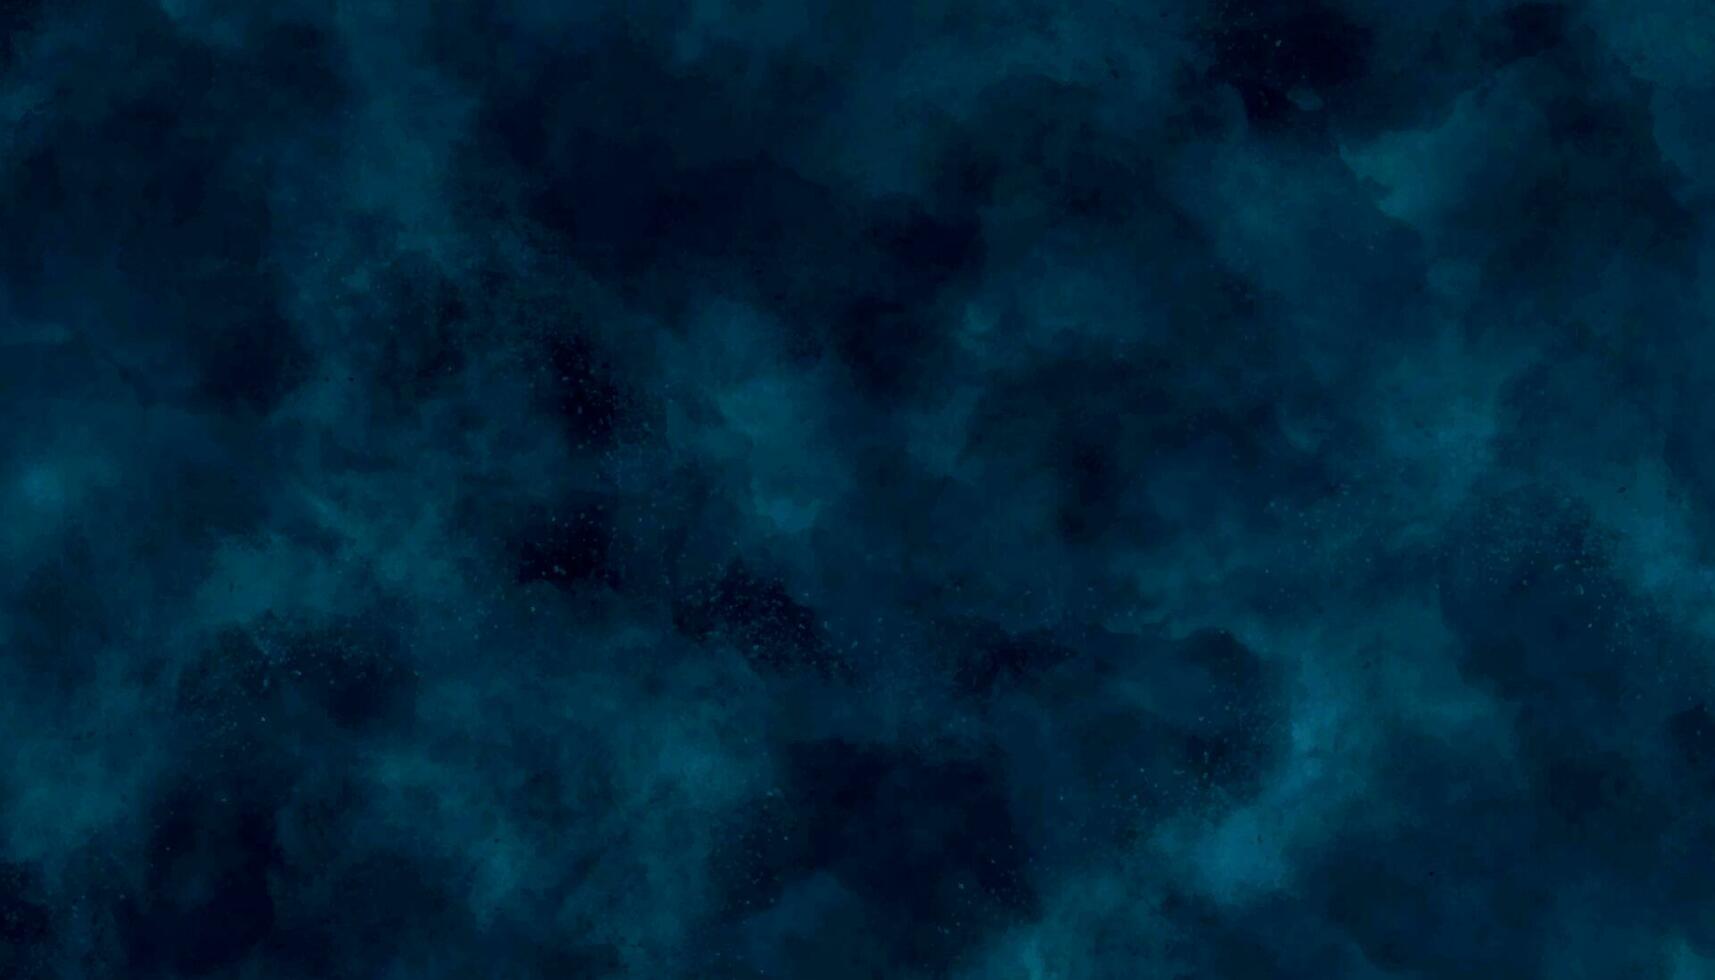 zwart, blauw waterverf grunge. zwart en blauw achtergrond. donker blauw achtergrond. donker blauw waterverf achtergrond. marine blauw waterverf en papier structuur vector